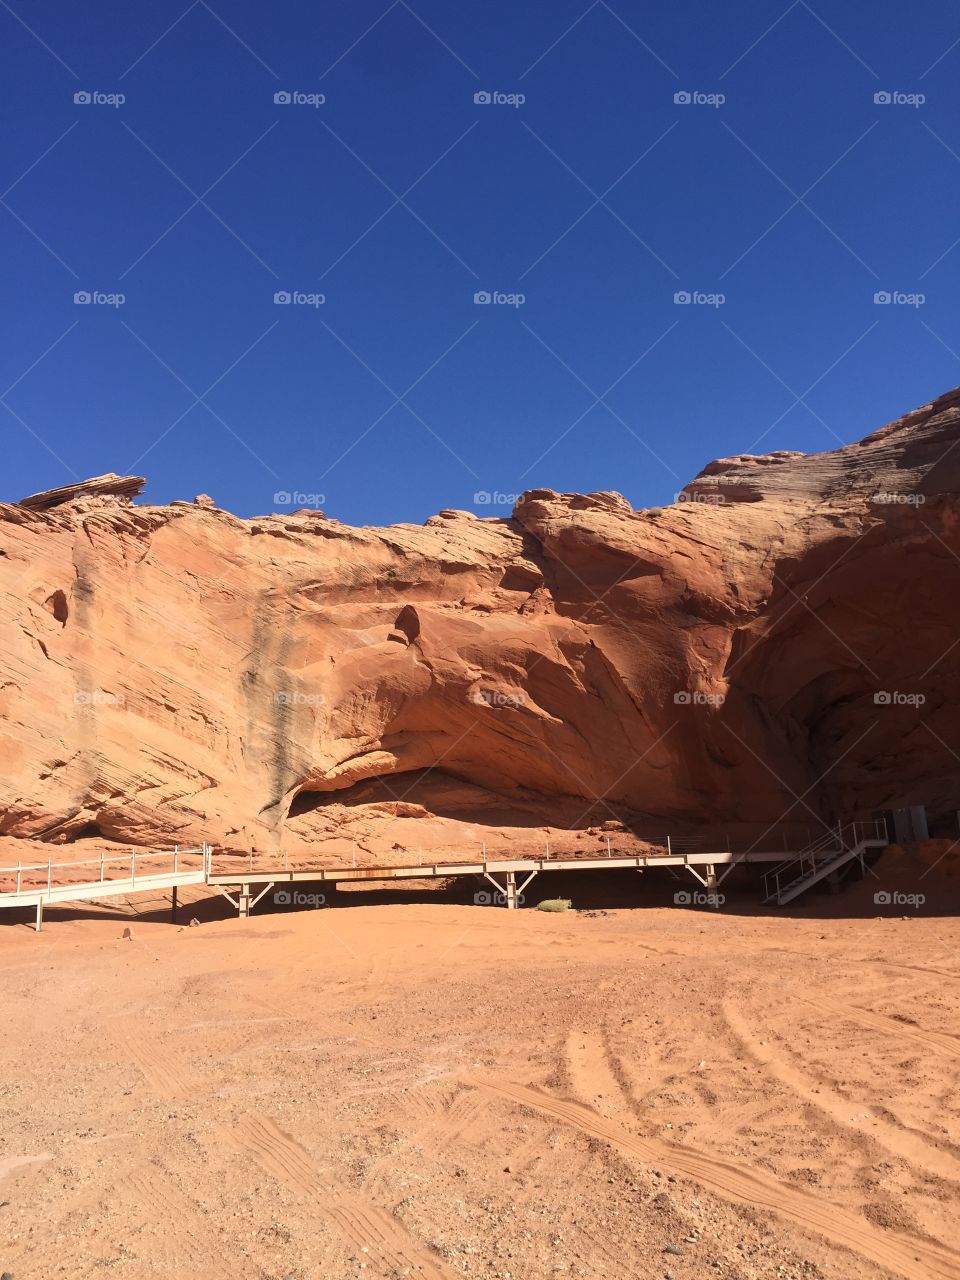 Red rock amphitheater in Arizona 